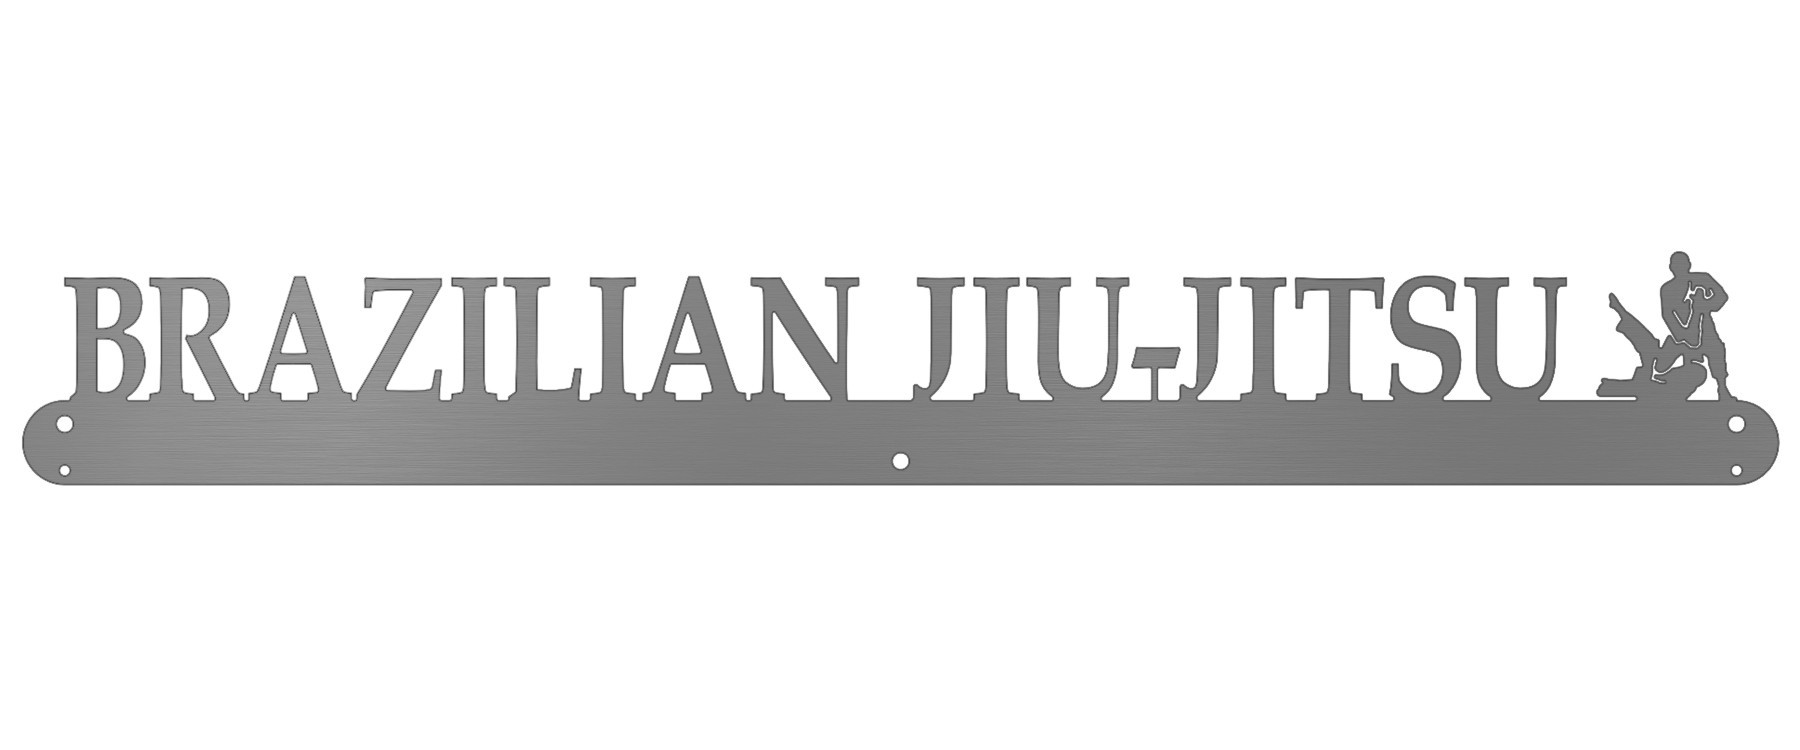 Brazilian Jiu Jitsu Belt Display - Male